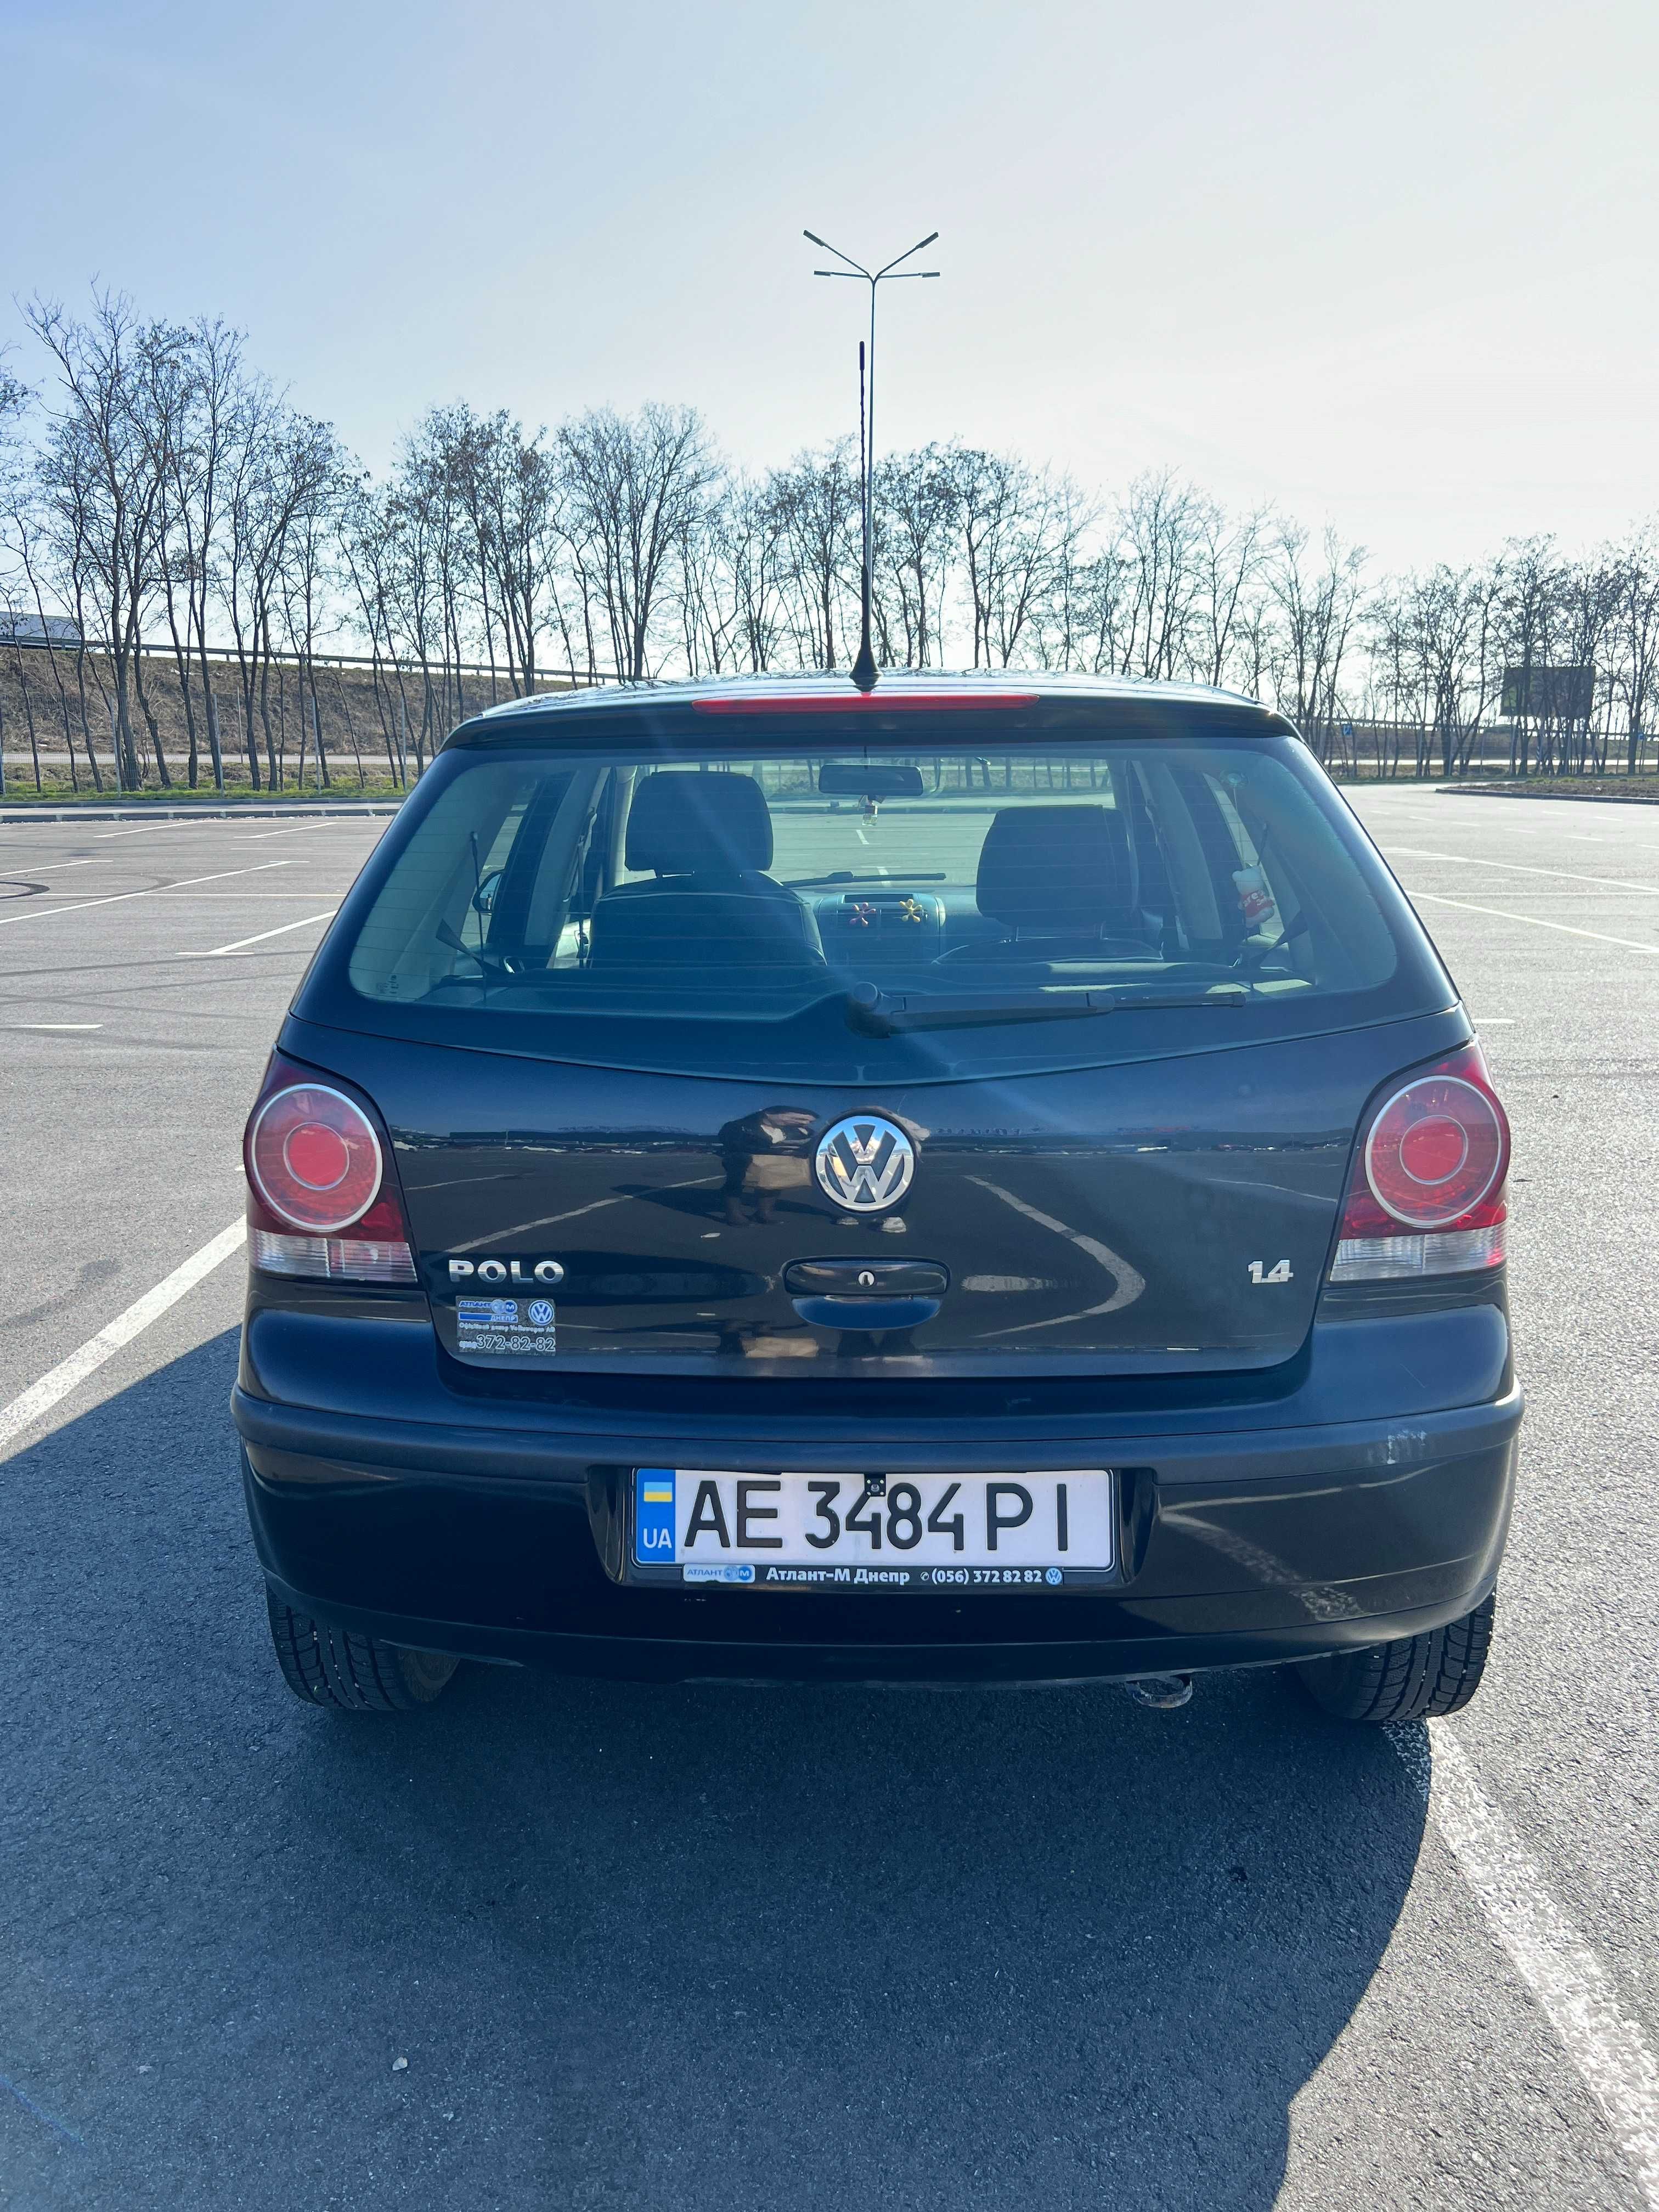 Volkswagen Polo 2008 | 1.4 бензин, автомат 6-ступка +резина в Подарок